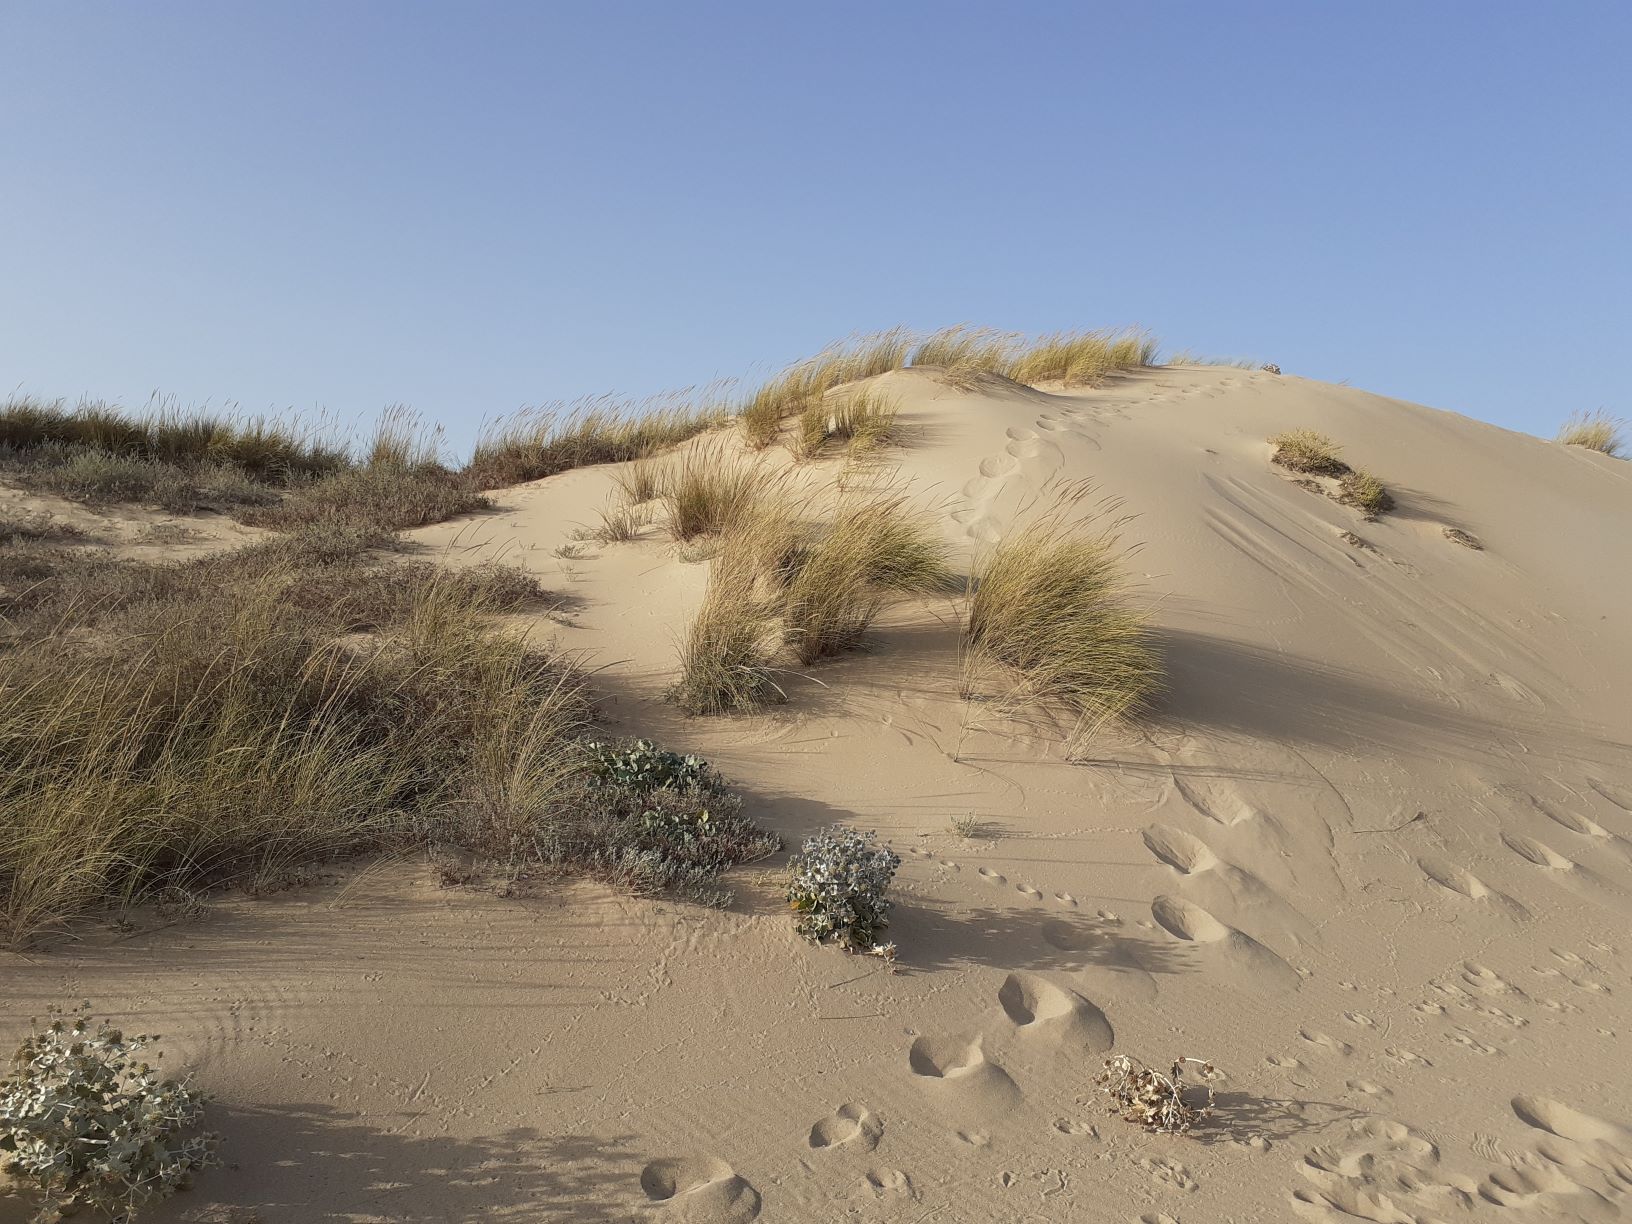 Vegetation growing on the dunes, including Ammophila arenaria, in Cresmina, Portugal, 2021.